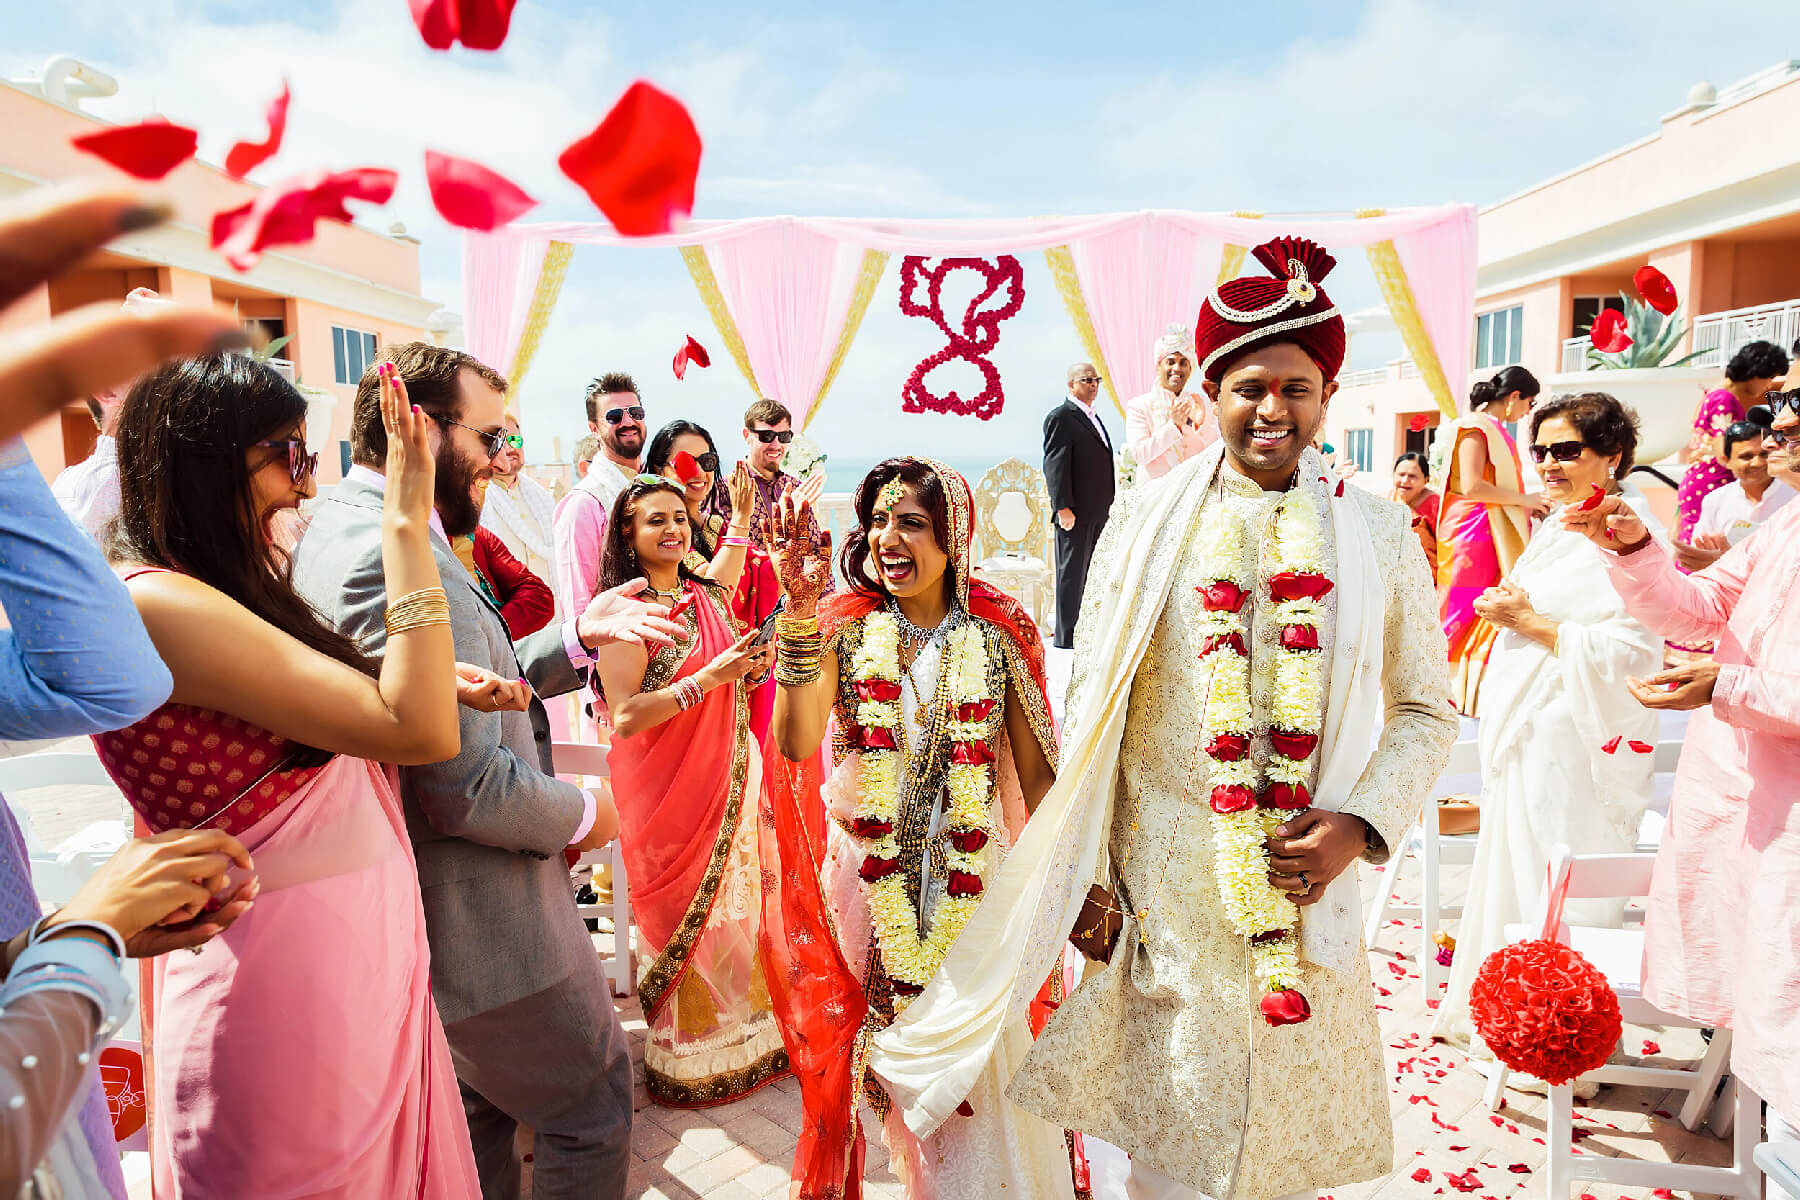 Indian wedding invitation wording for your big celebration